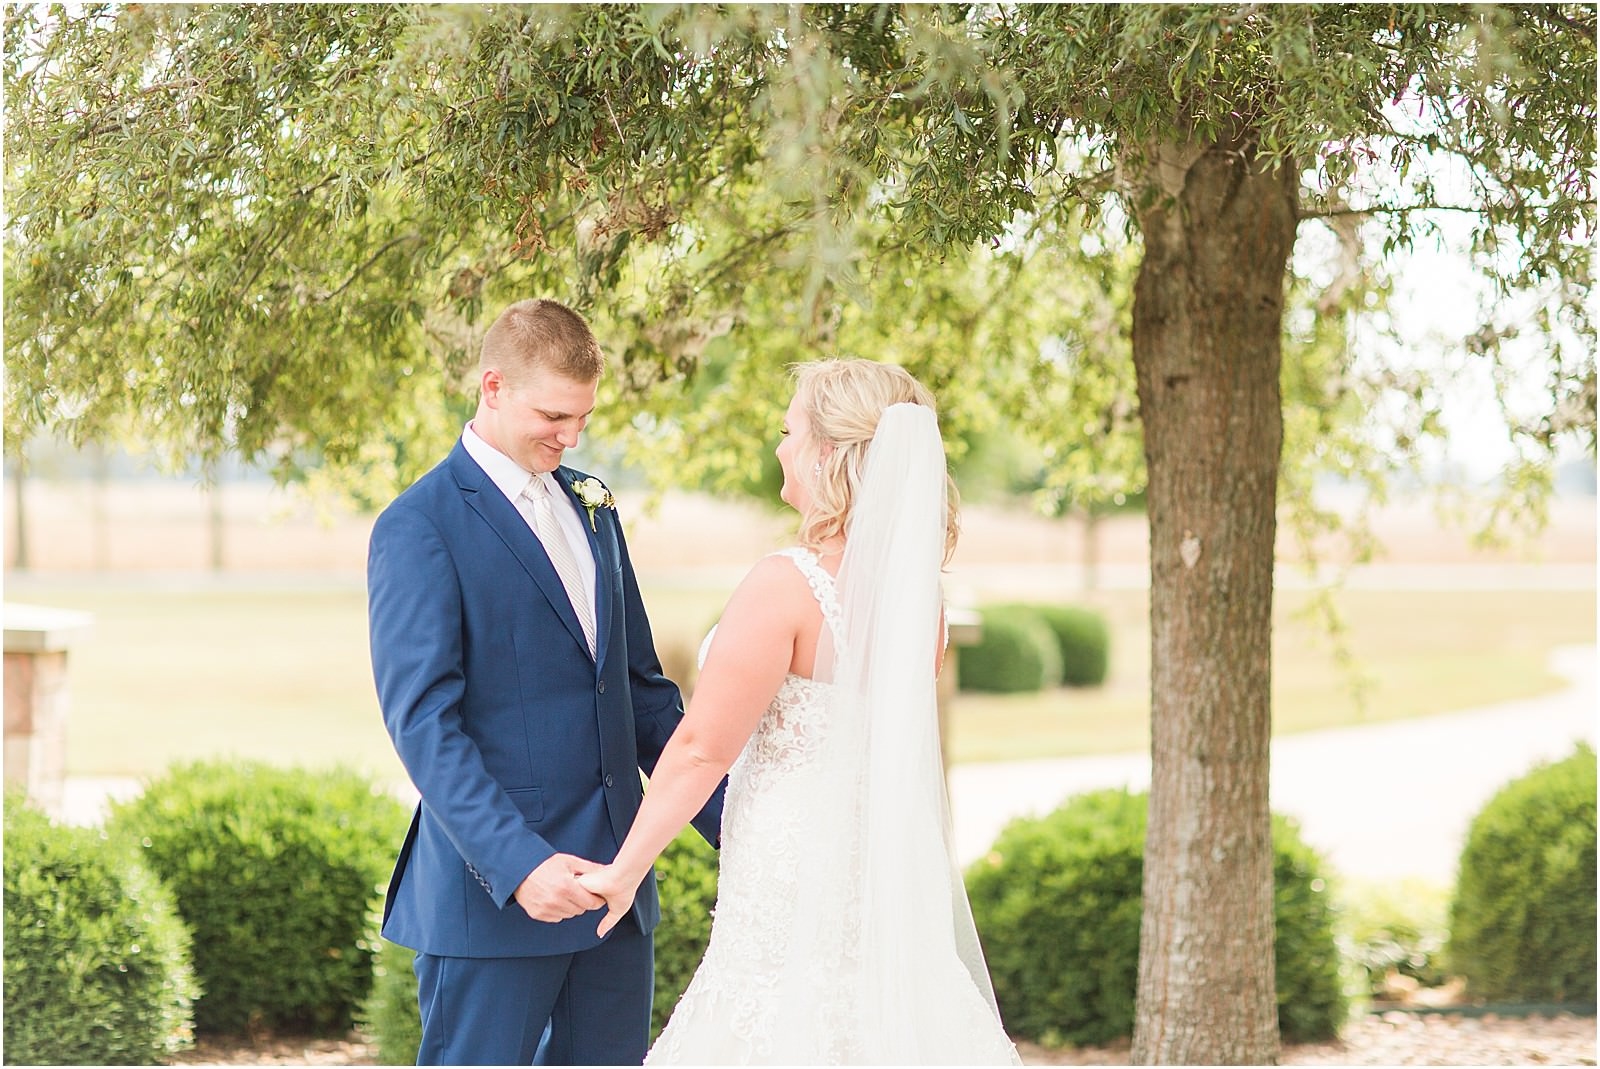 Kelsey and Caleb | Walkers Bluff Winery Wedding | Bret and Brandie Photography038.jpg